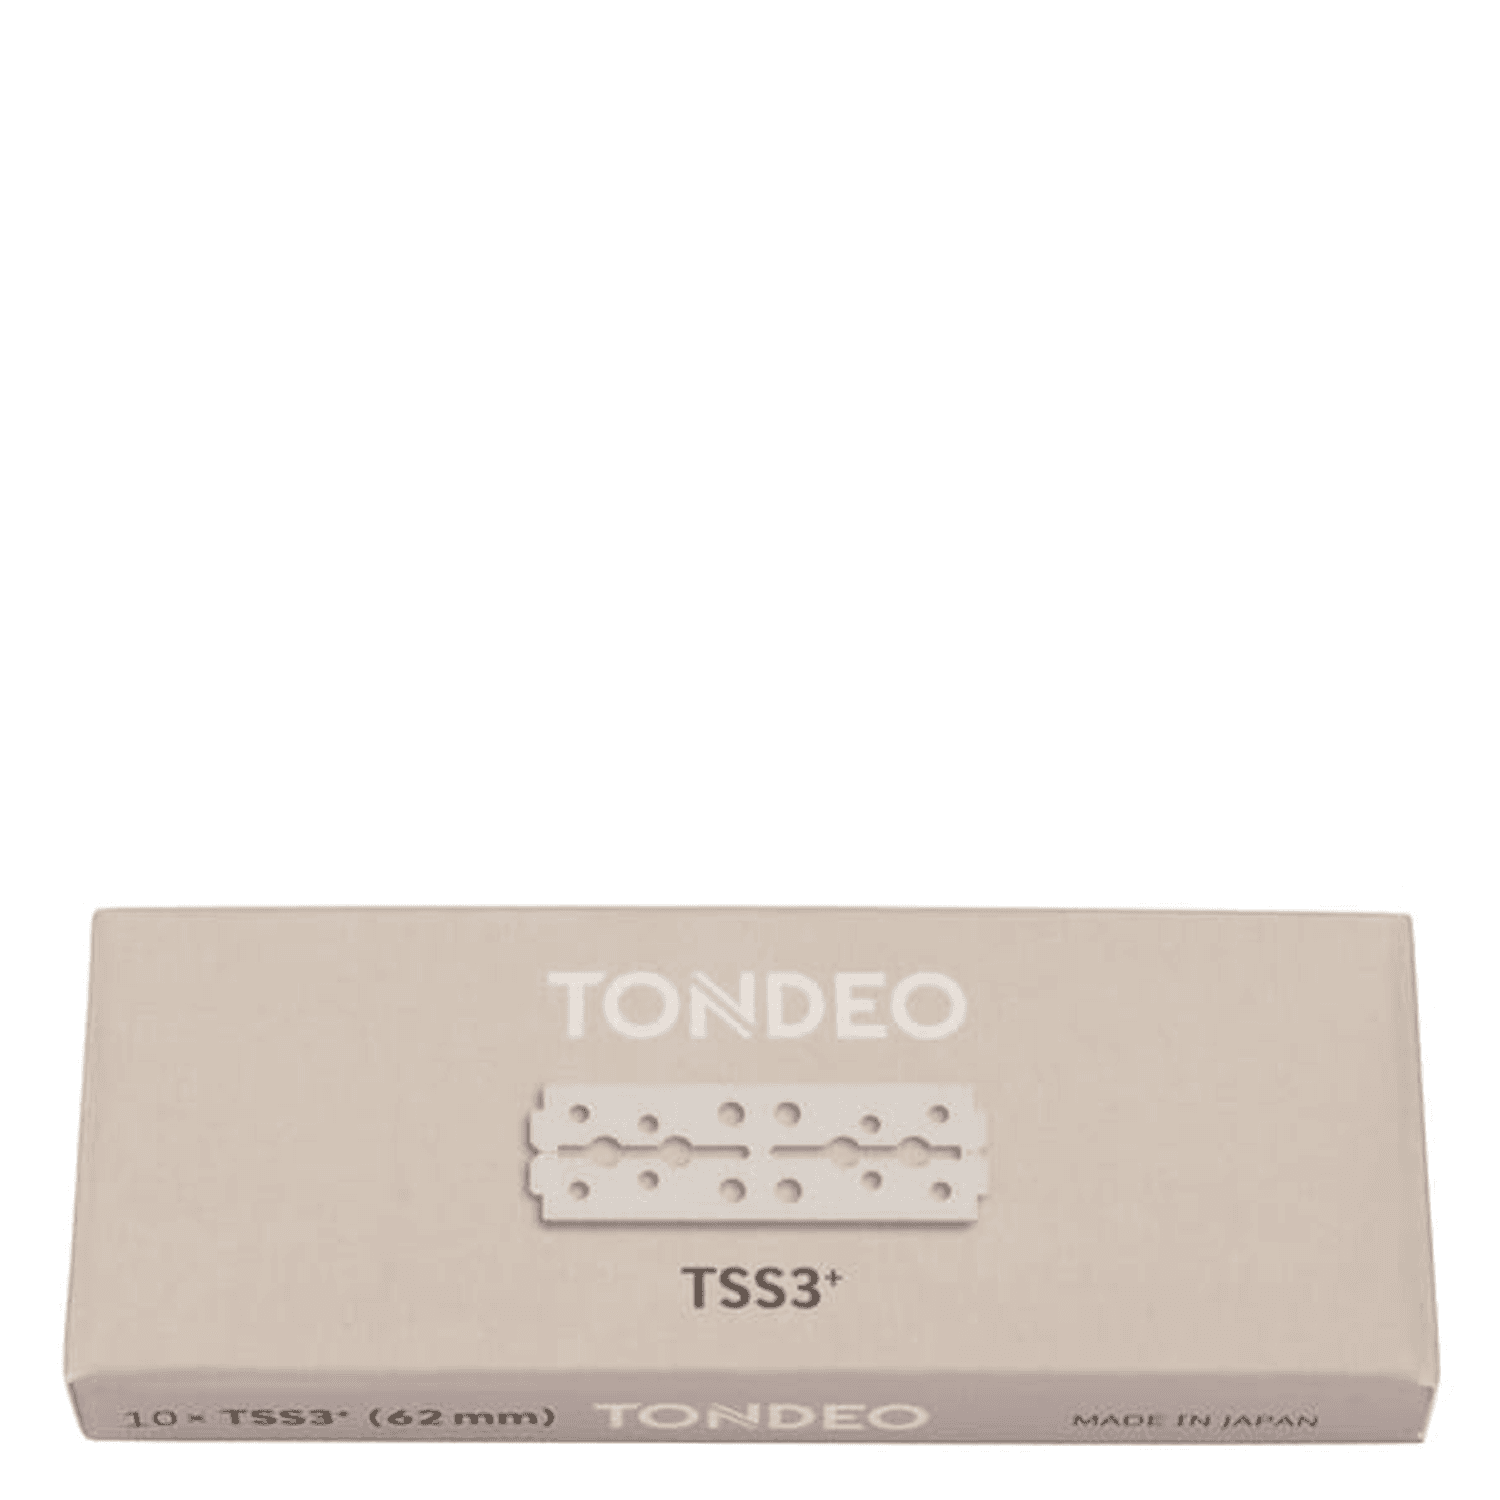 Tondeo Blades - TSS3+ Blades